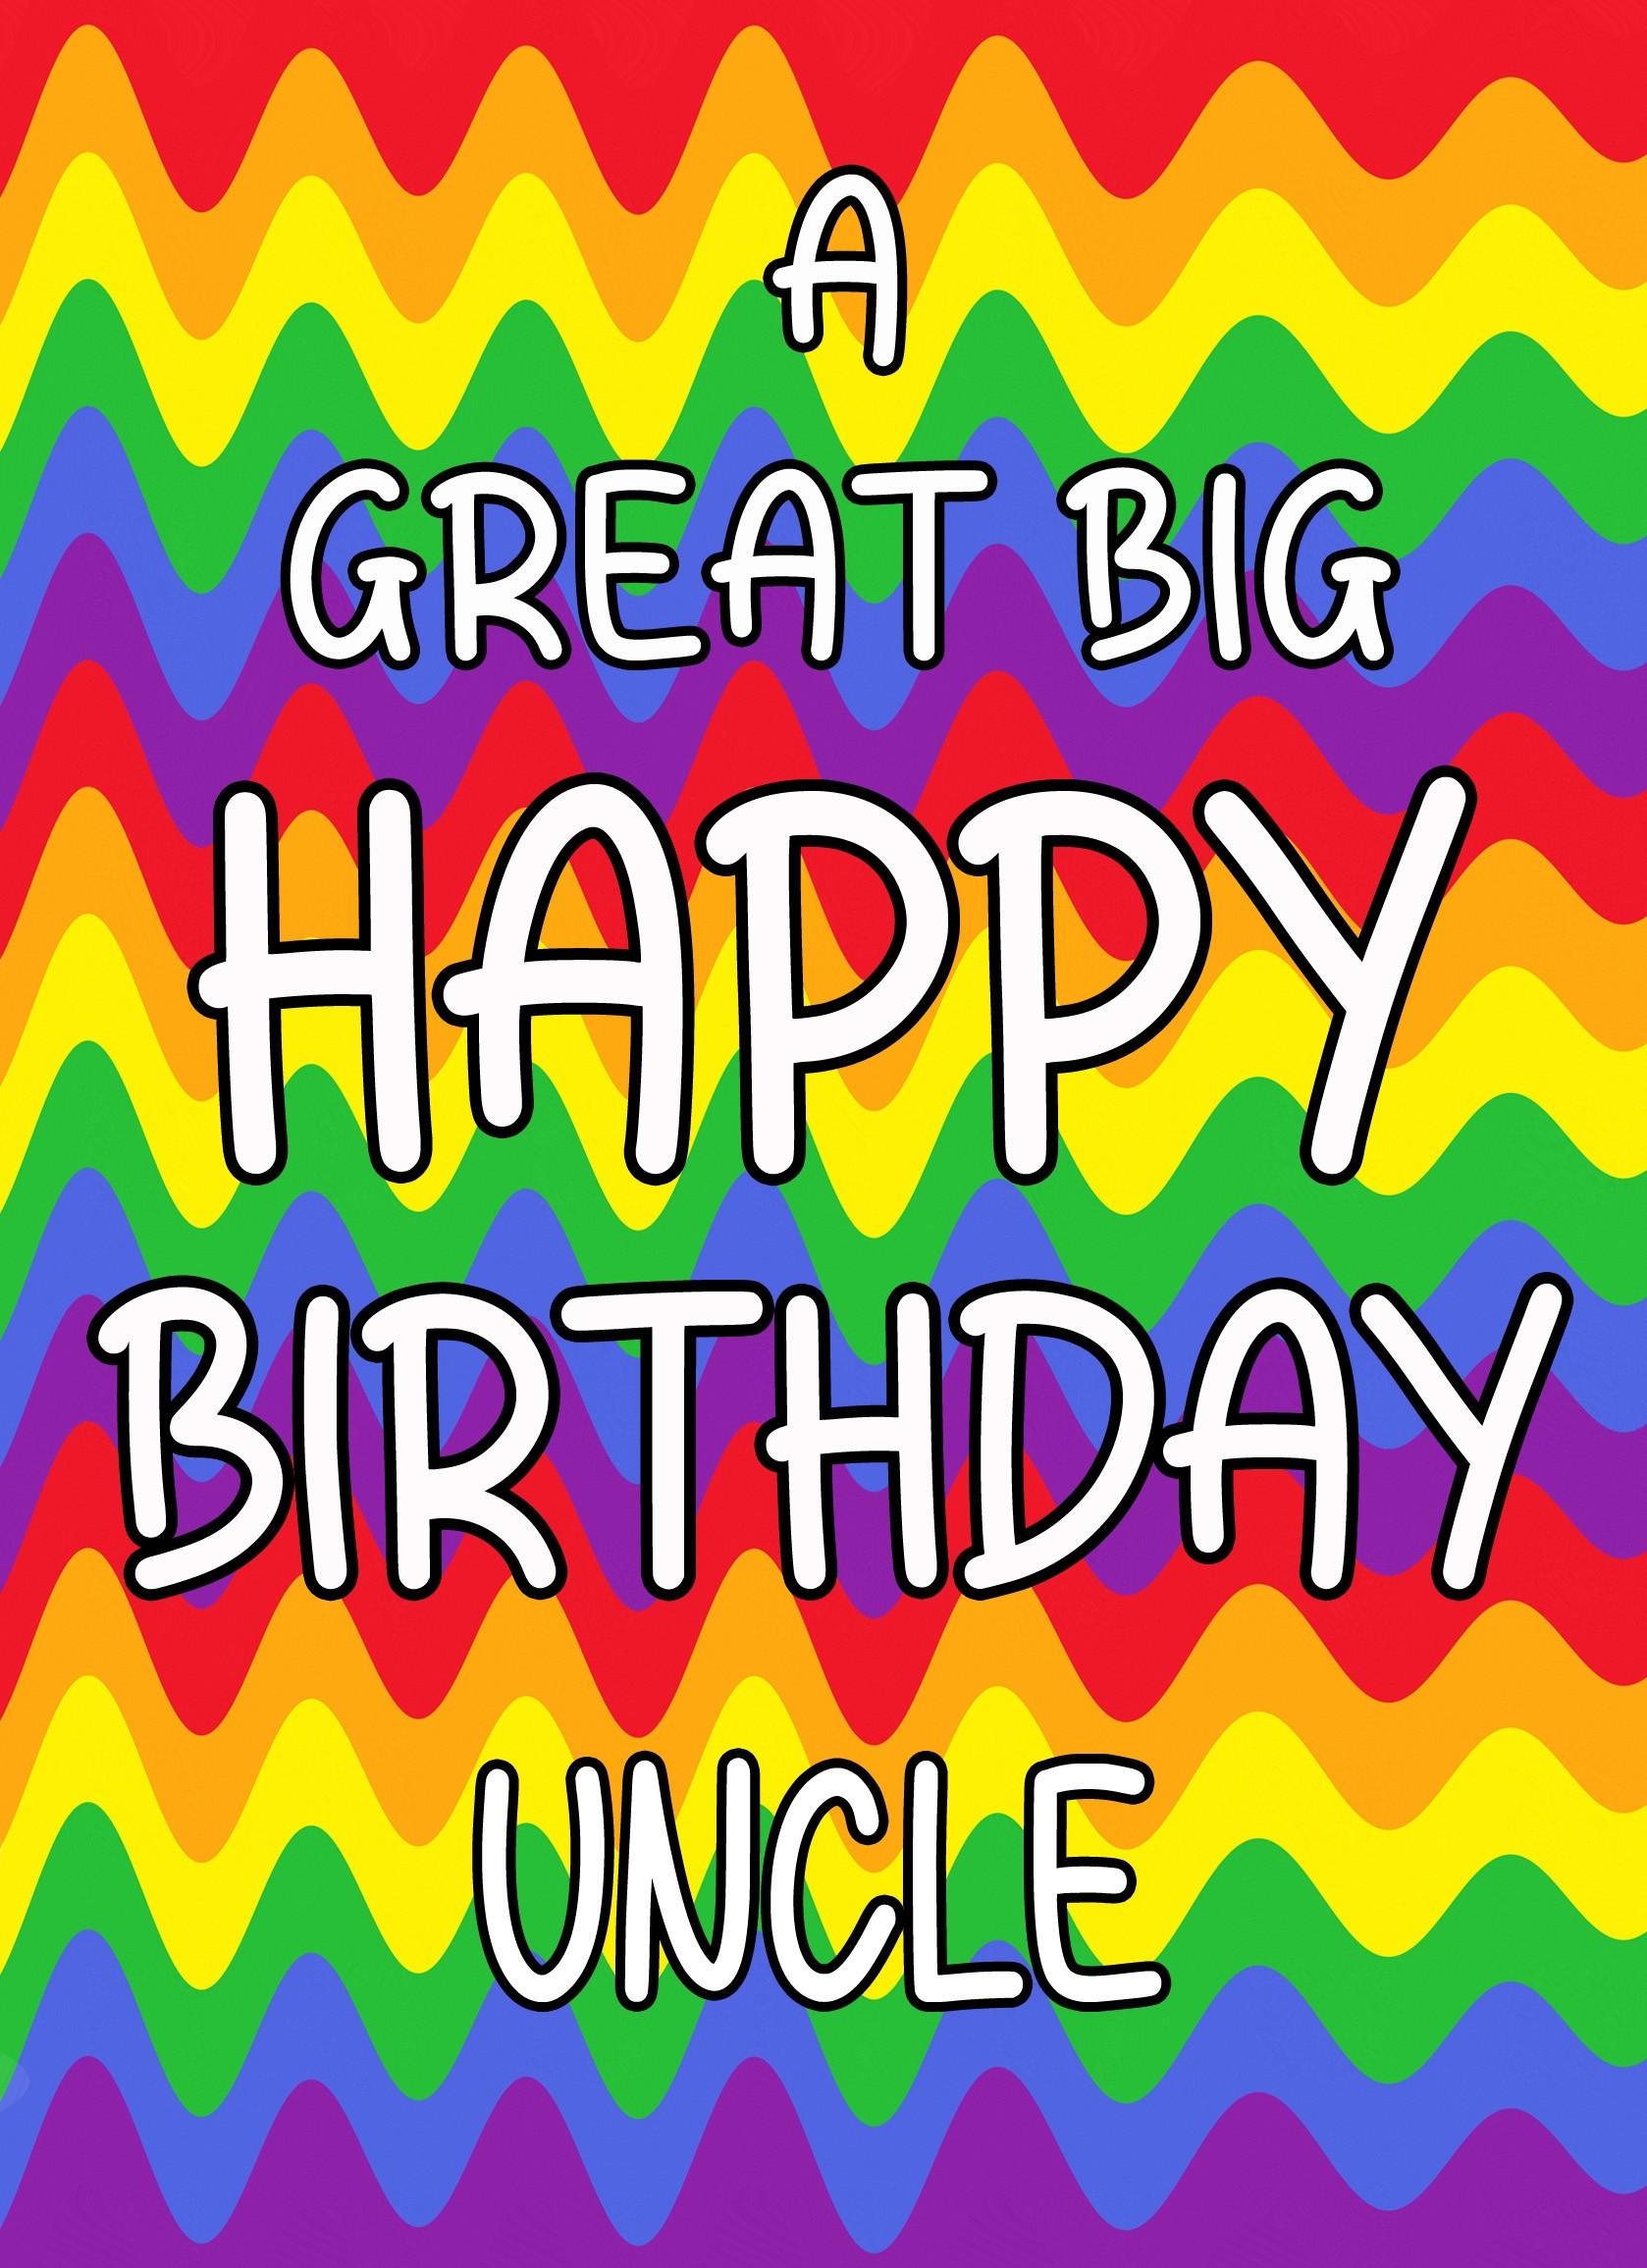 Happy Birthday 'Uncle' Greeting Card (Rainbow)